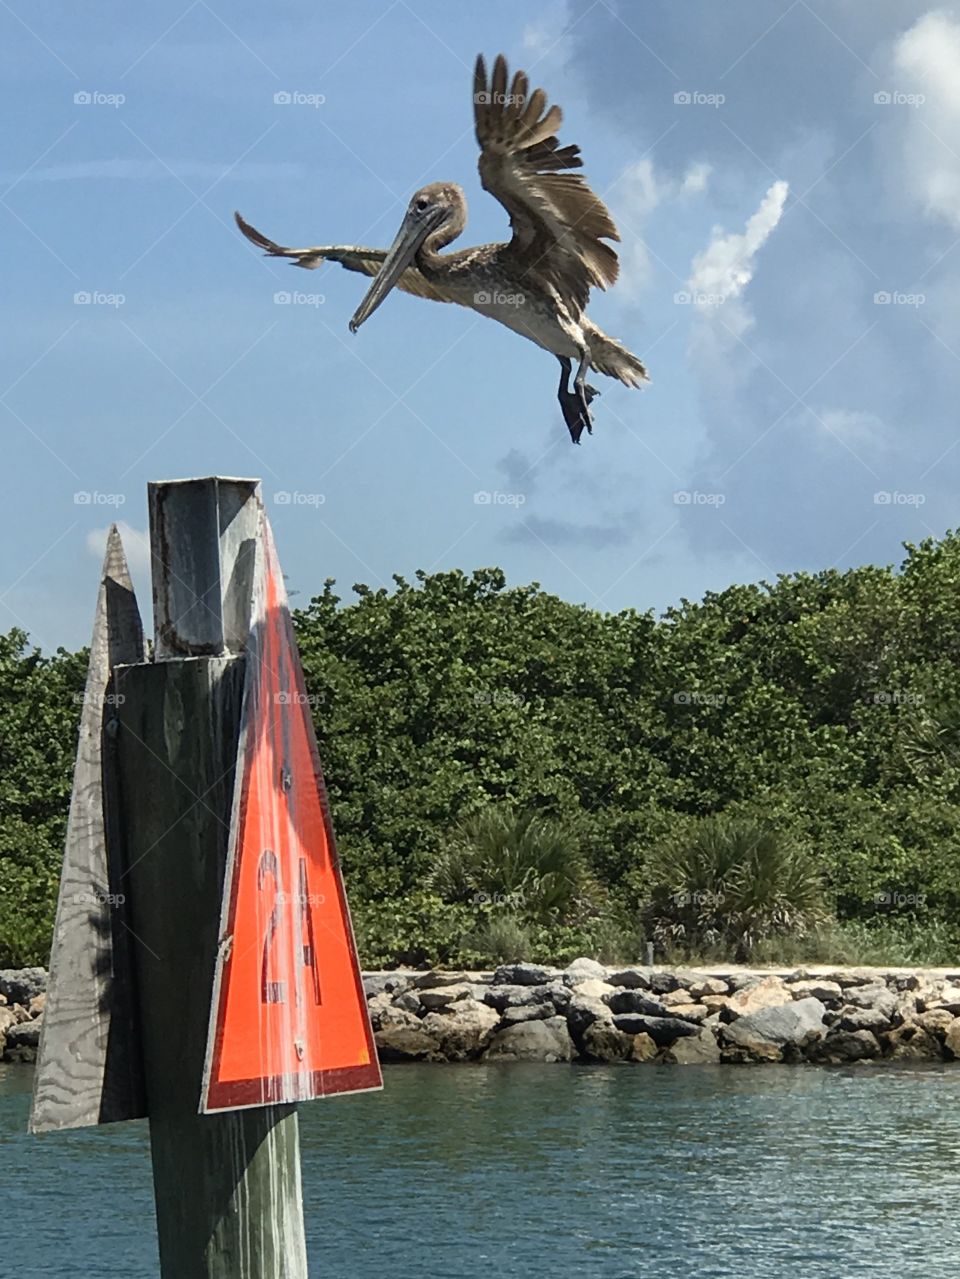 Pelican coming in for a landing